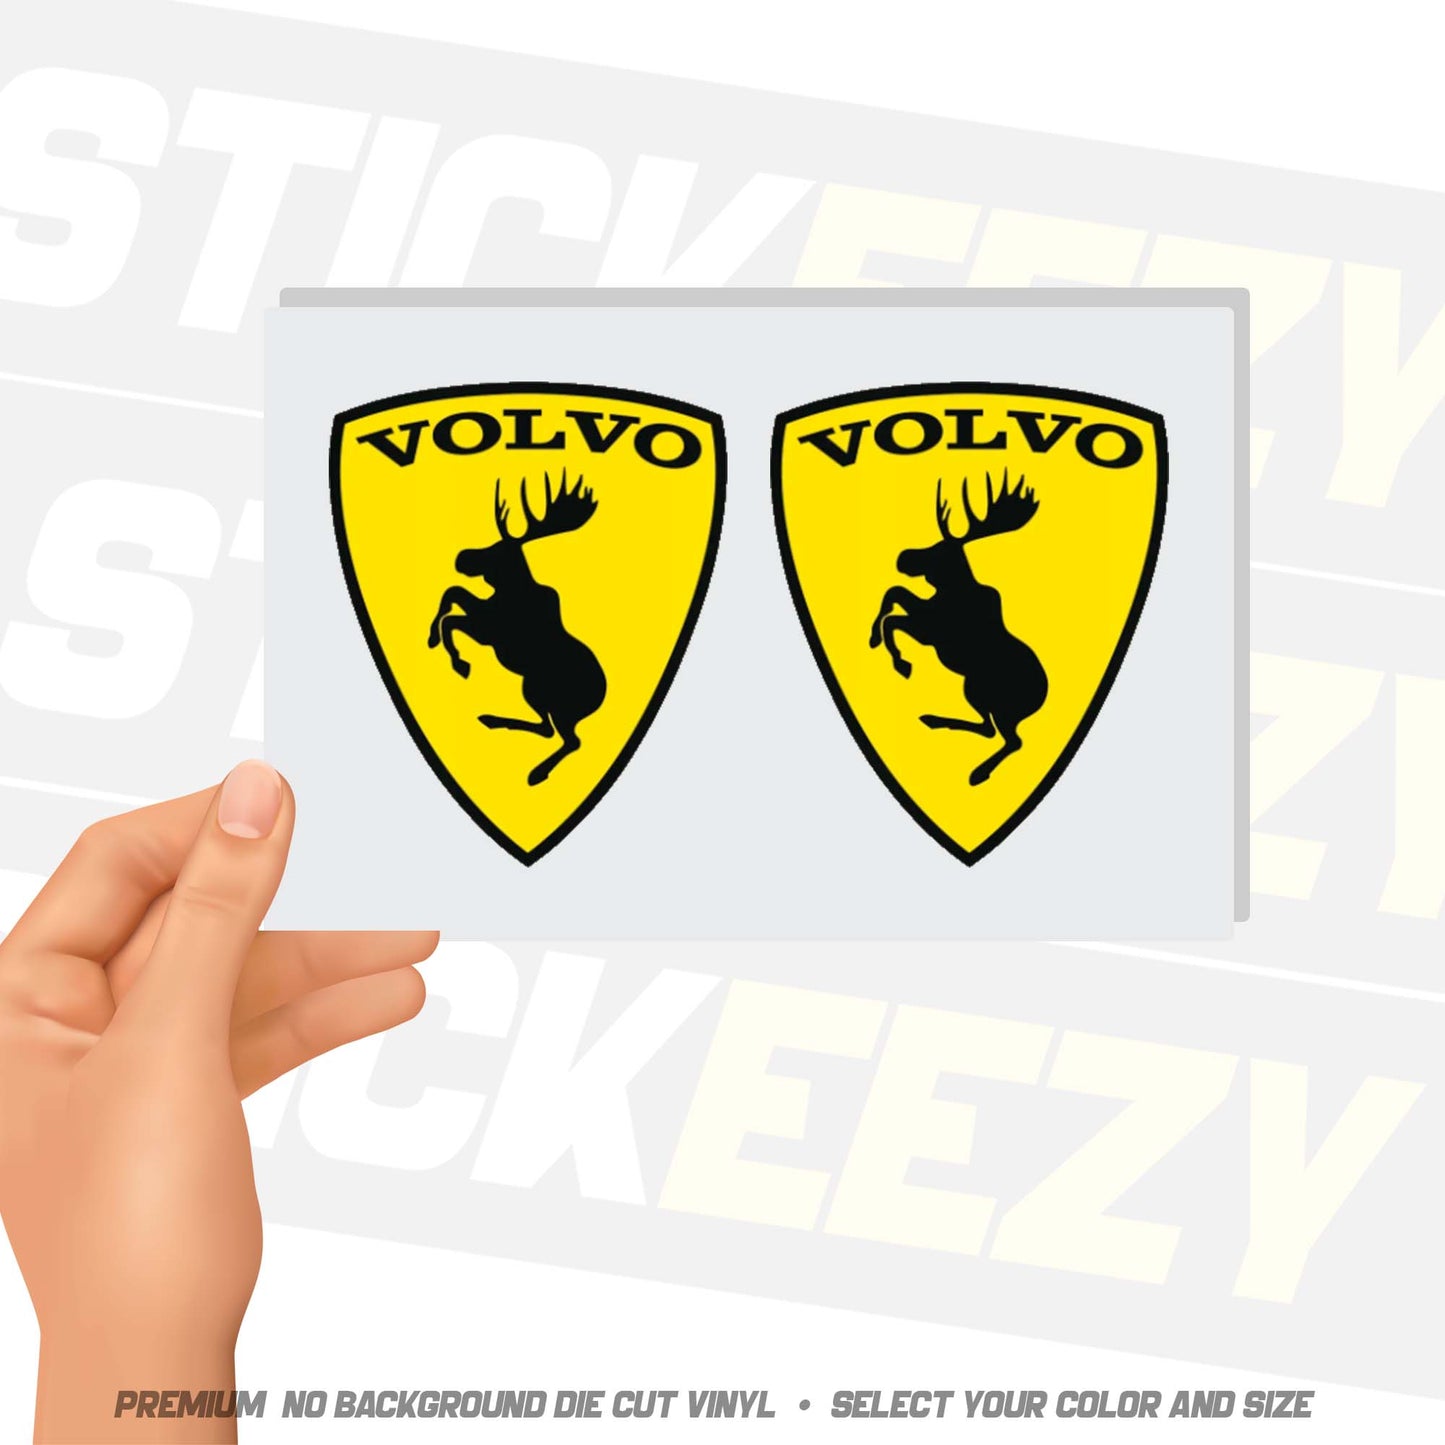 Volvo moose sticker (2pcs)